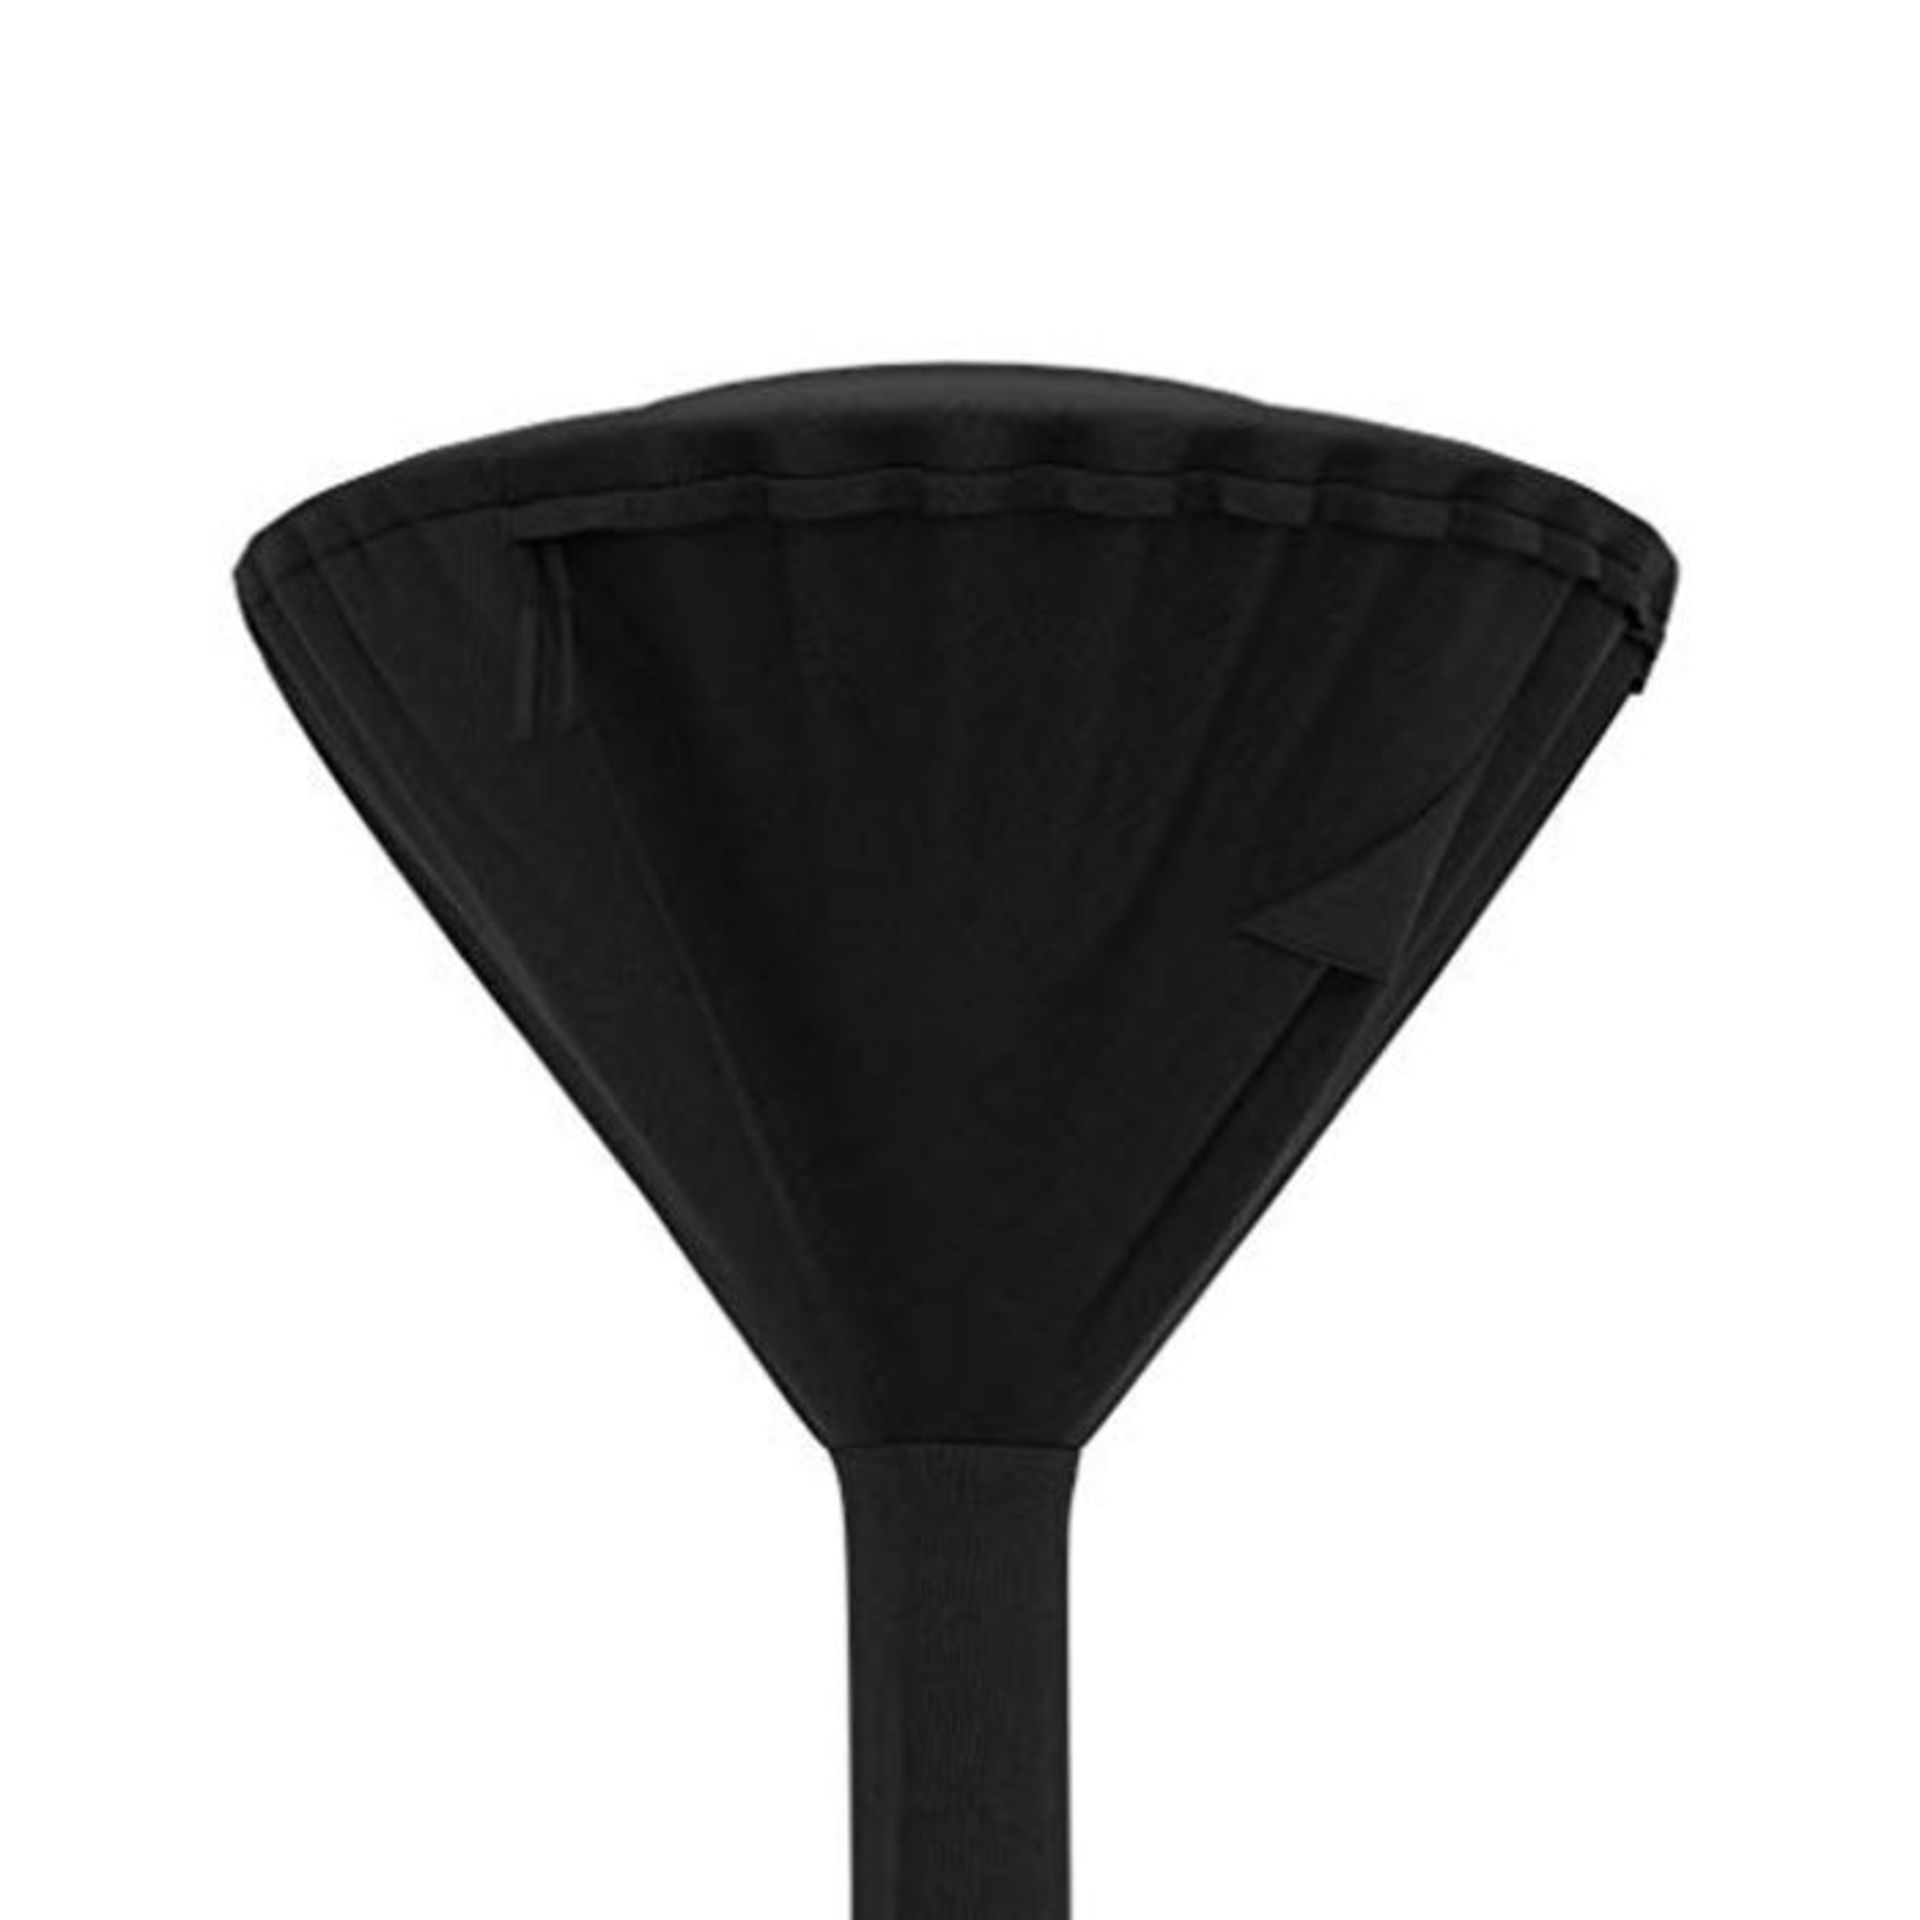 Amazon Basics Round Stand Up Patio Heater Cover - Black